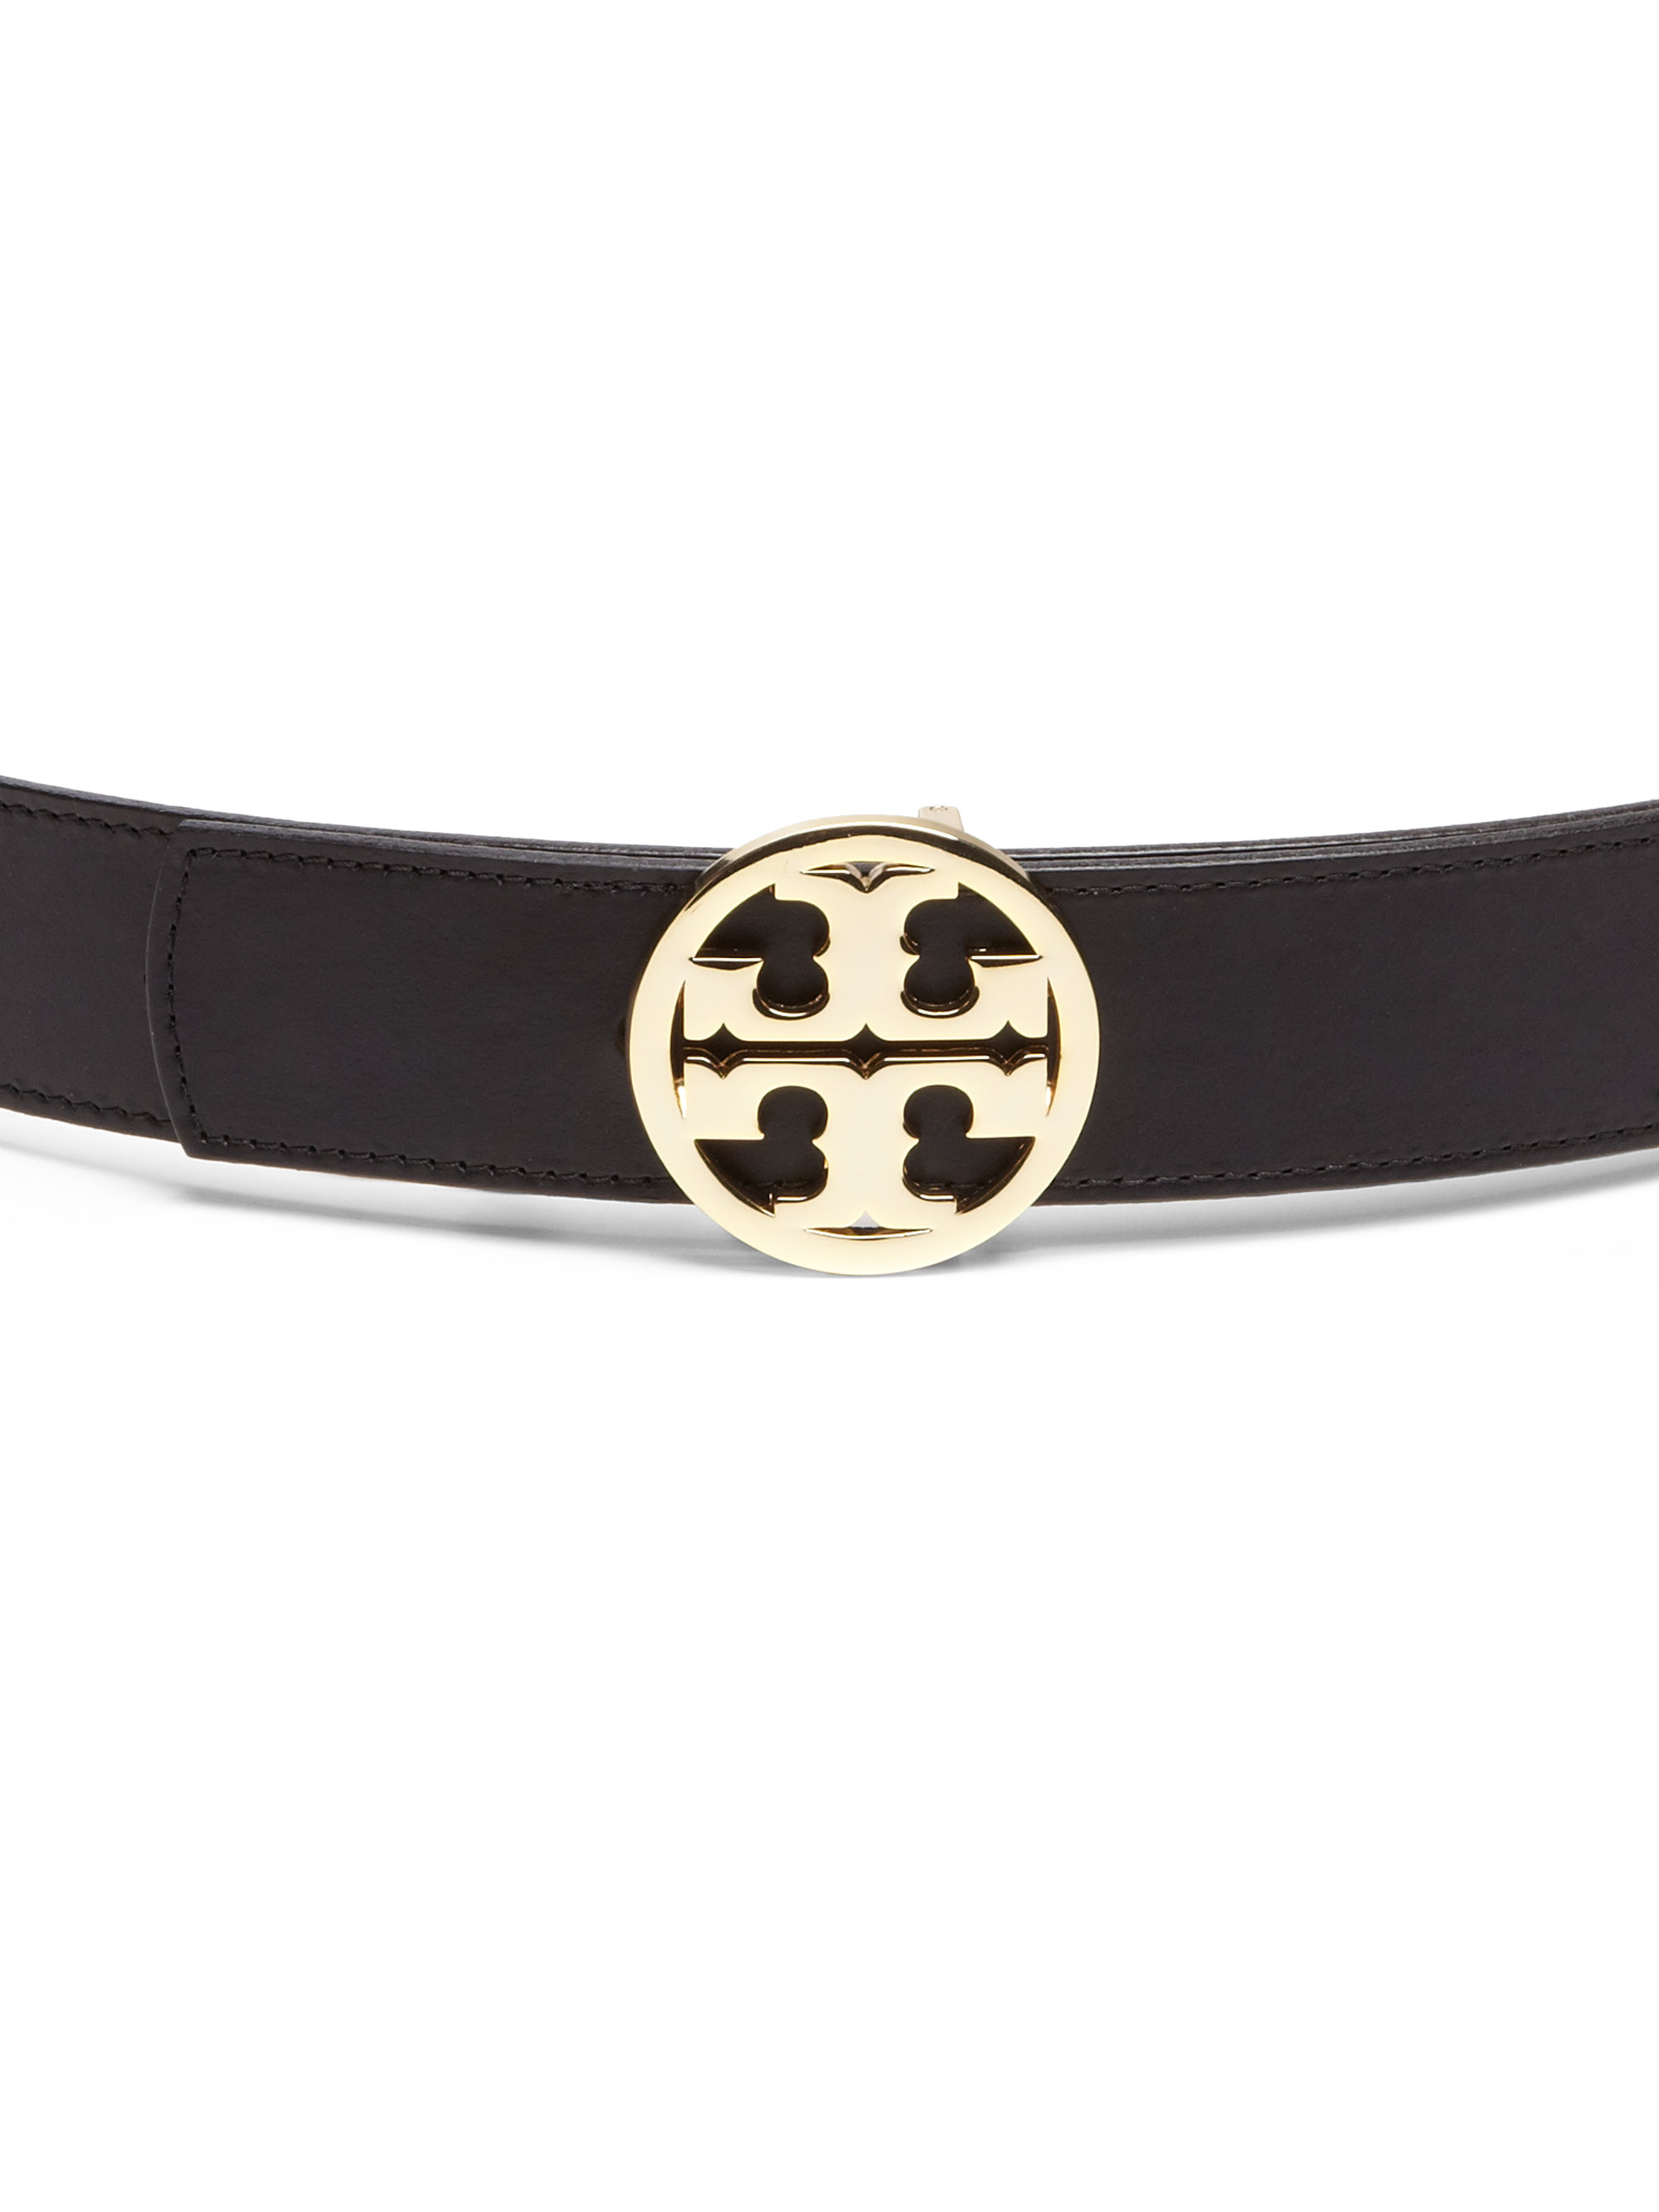 Tory burch Reversible Logo Leather Belt in Black | Lyst